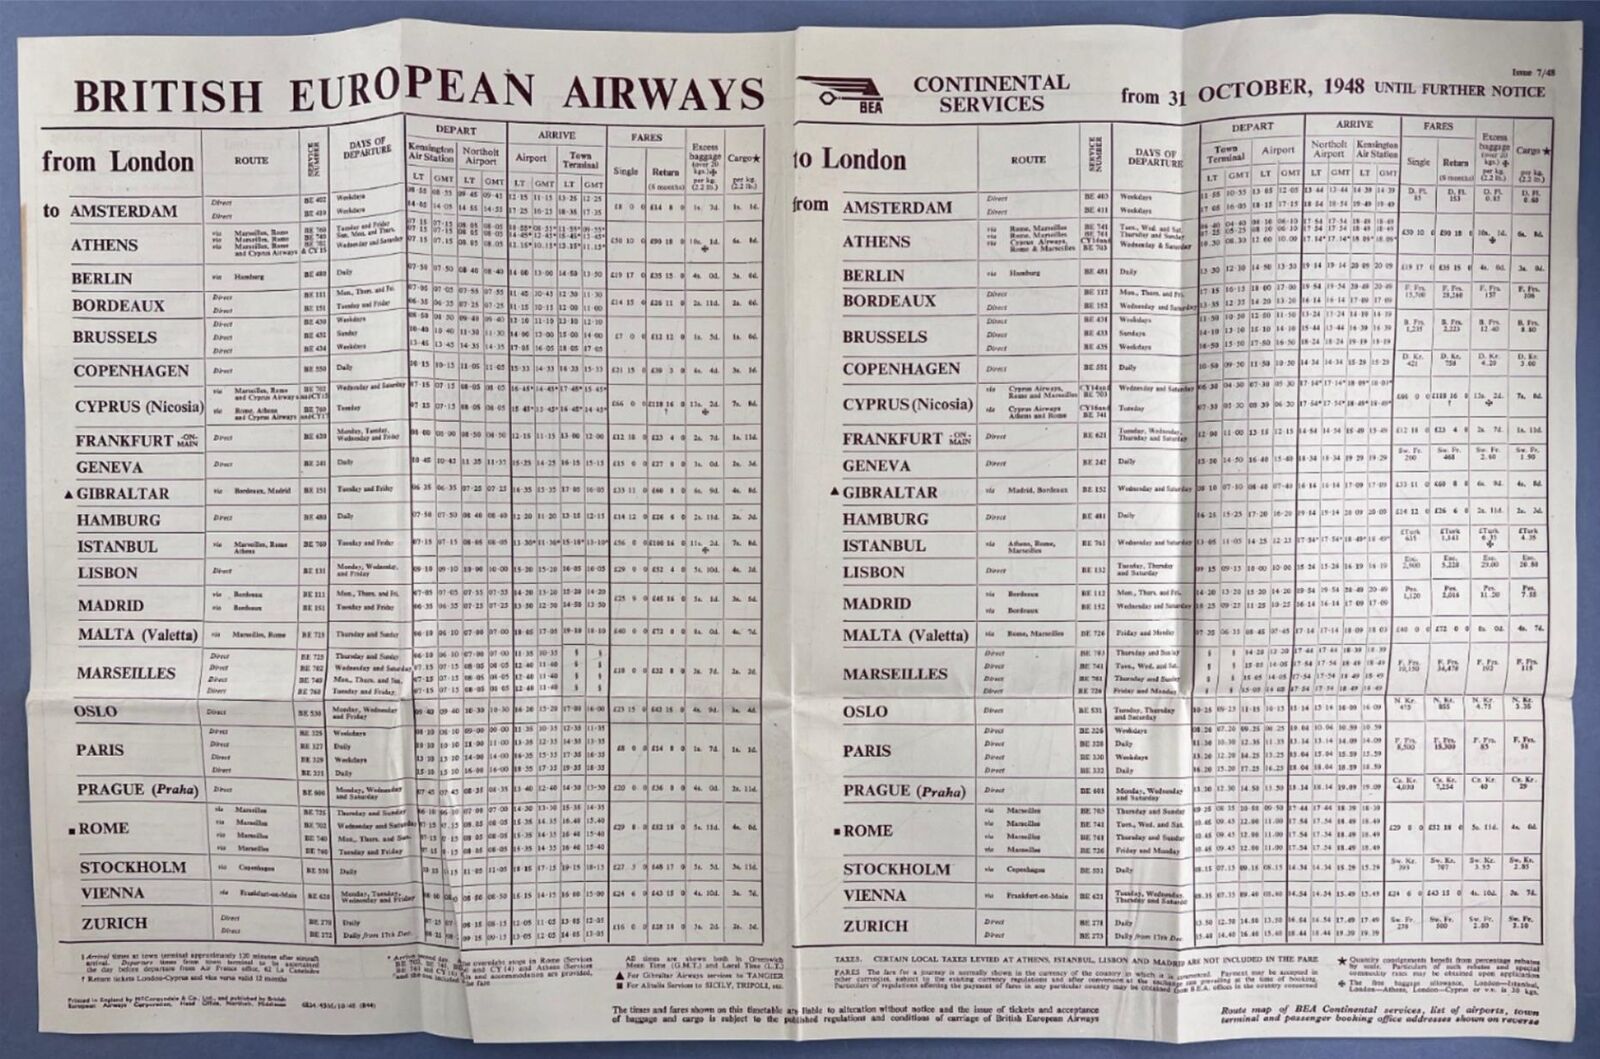 BEA BRITISH EUROPEAN AIRWAYS CONTINENTAL SERVICES AIRLINE TIMETABLE OCTOBER 1948